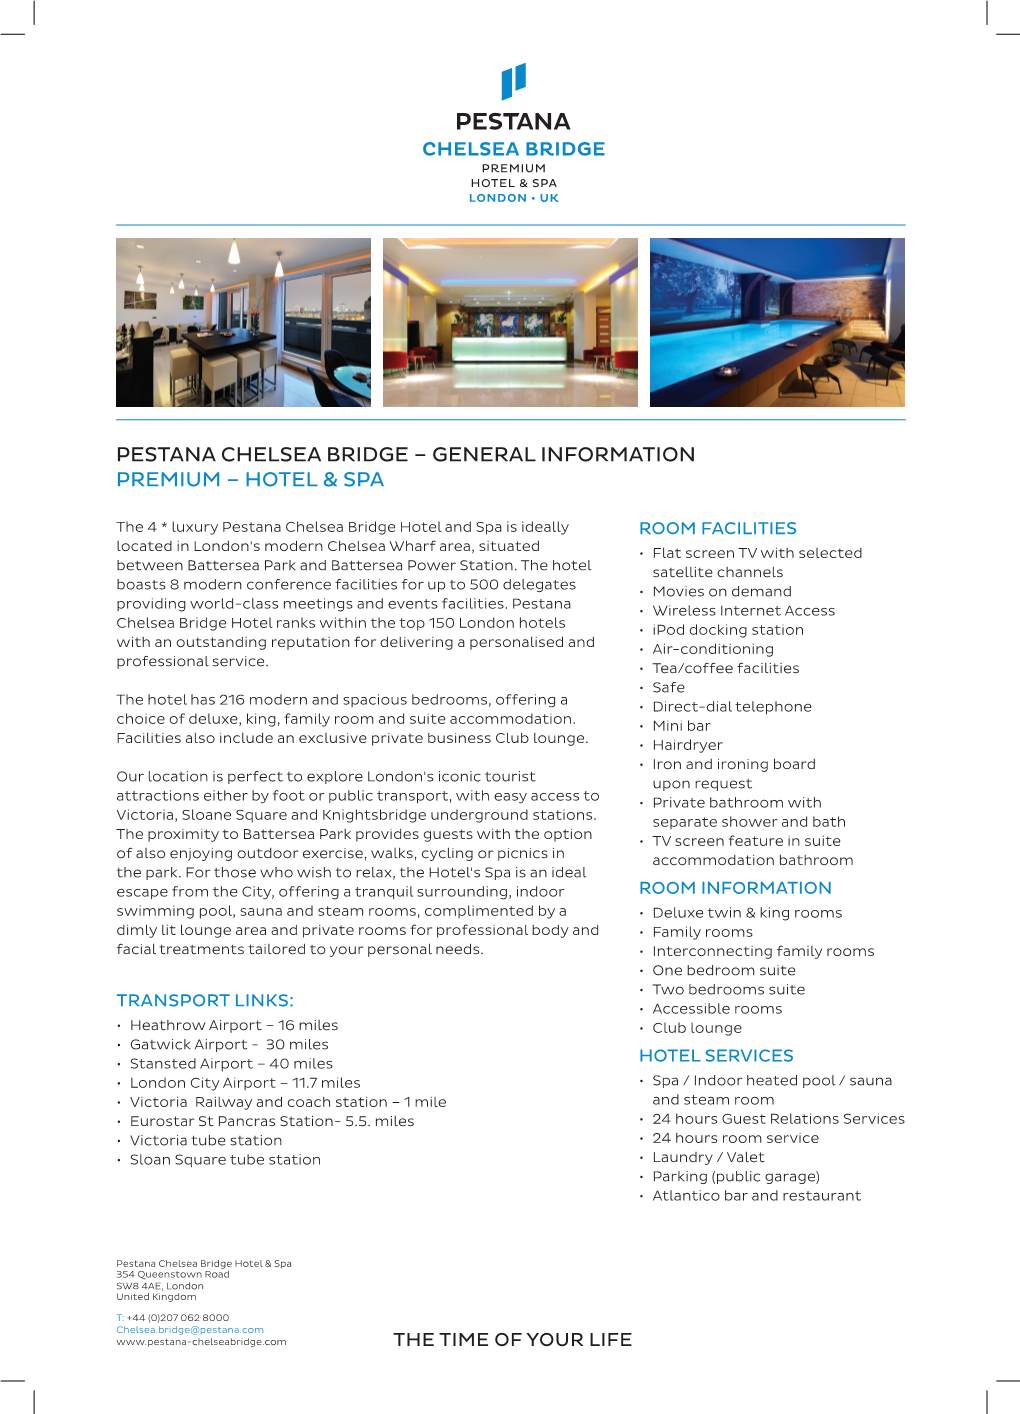 Pestana Chelsea Bridge – General Information Premium – Hotel & Spa